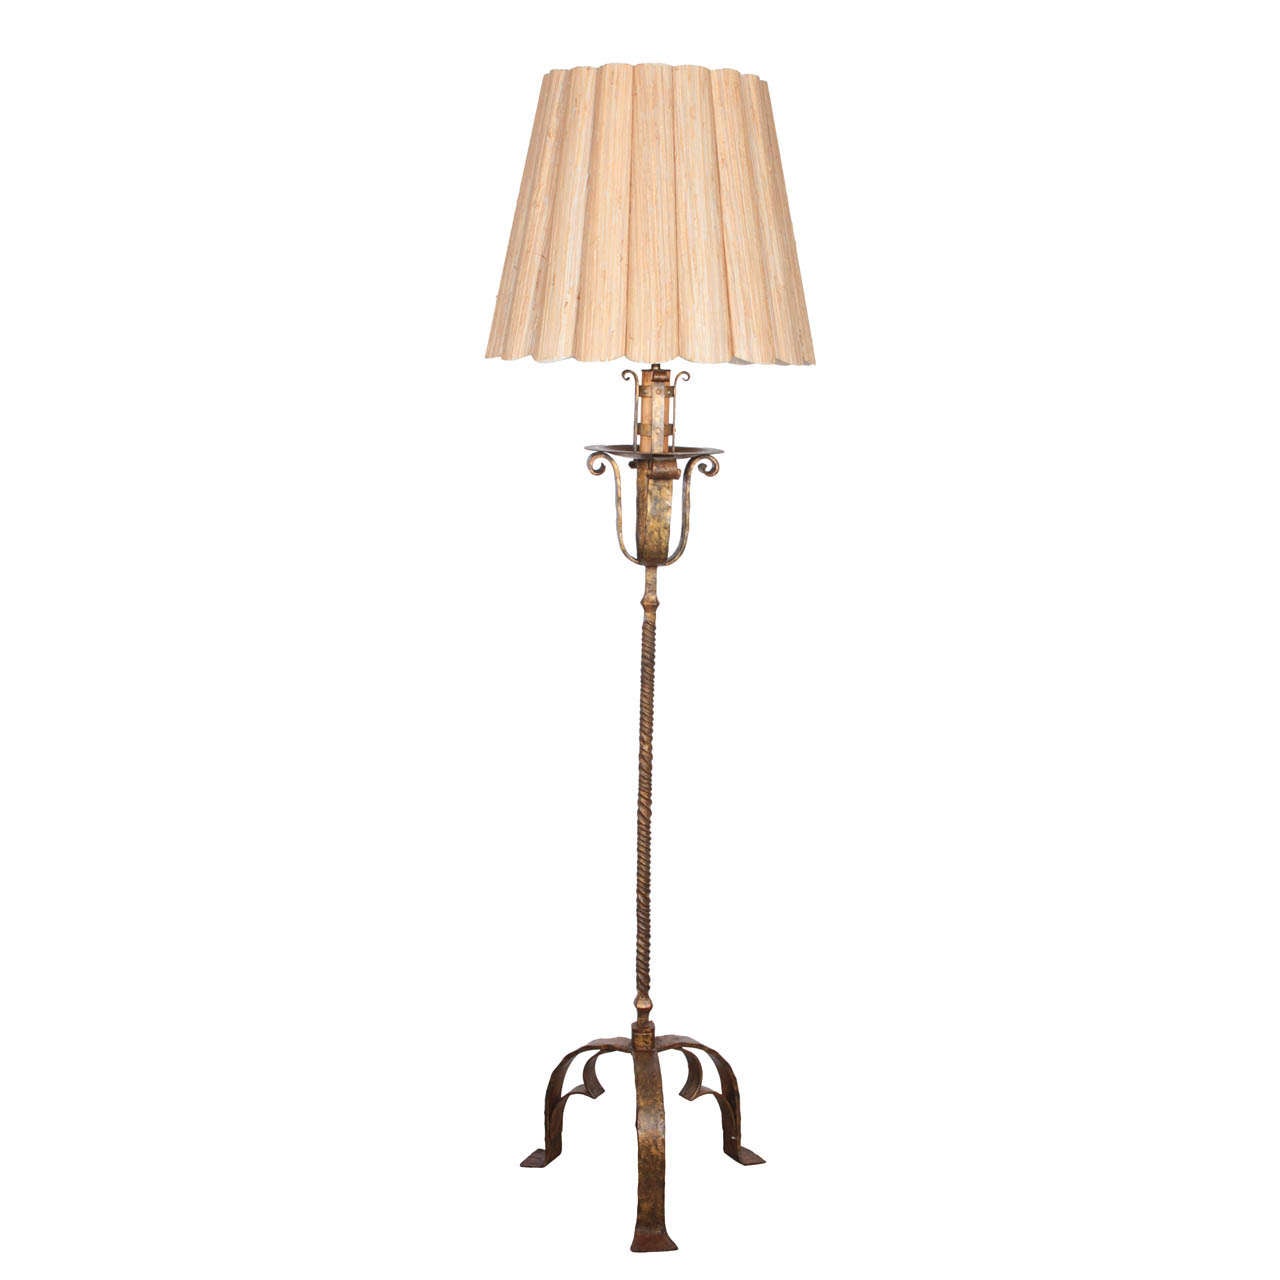 19th Century French Gilt Wrought Iron Floor Lamp